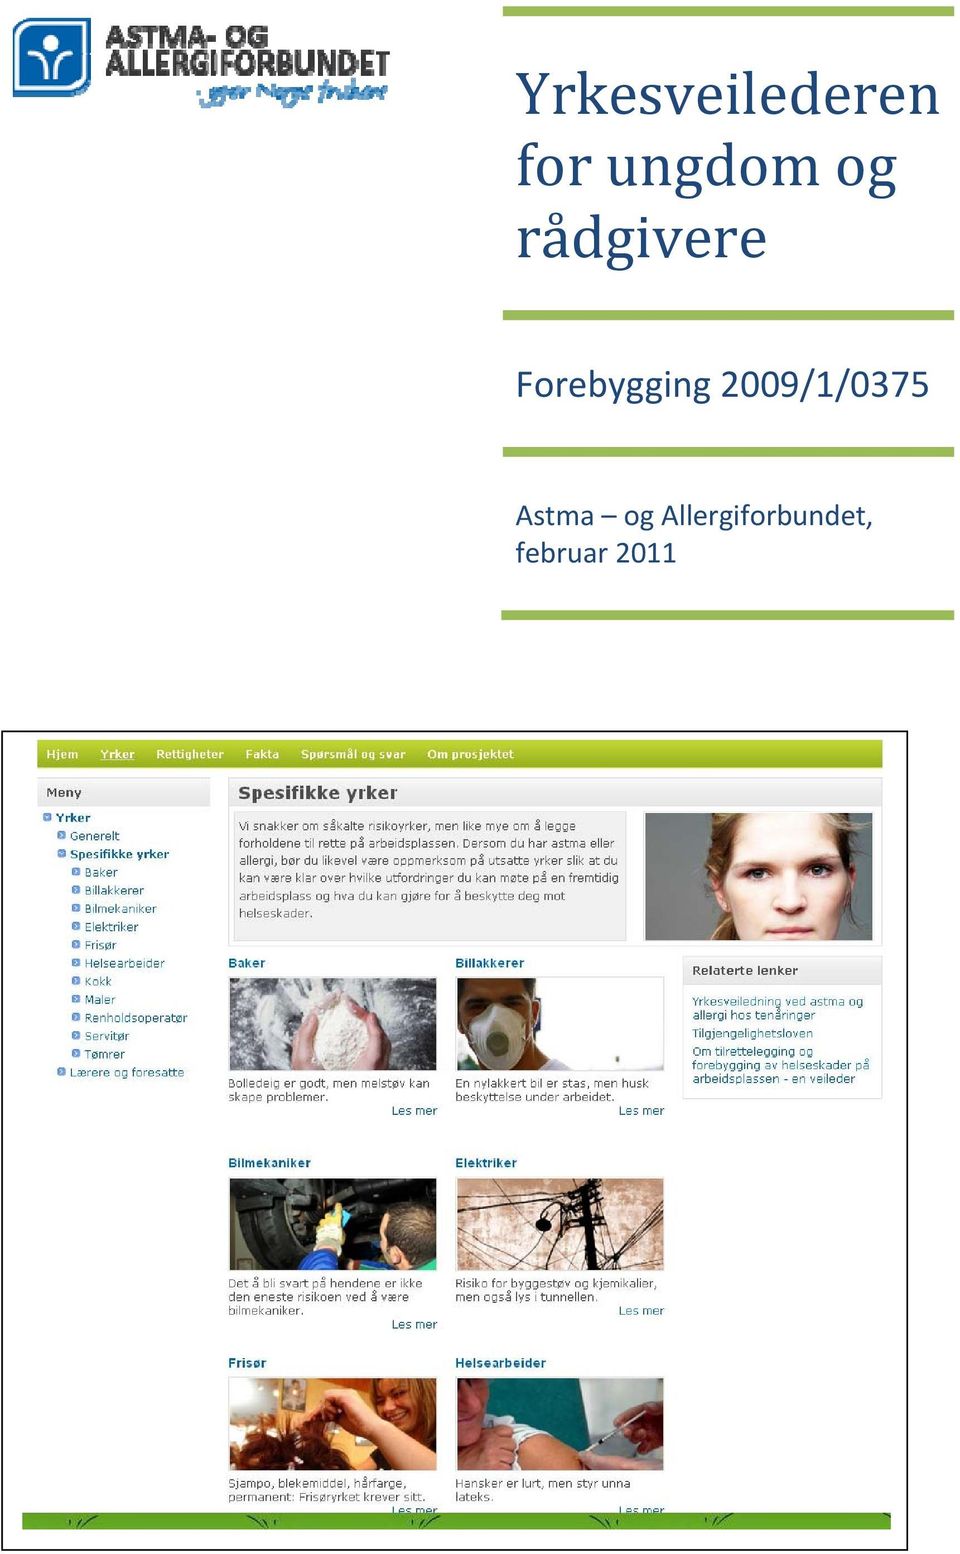 Forebygging 2009/1/0375